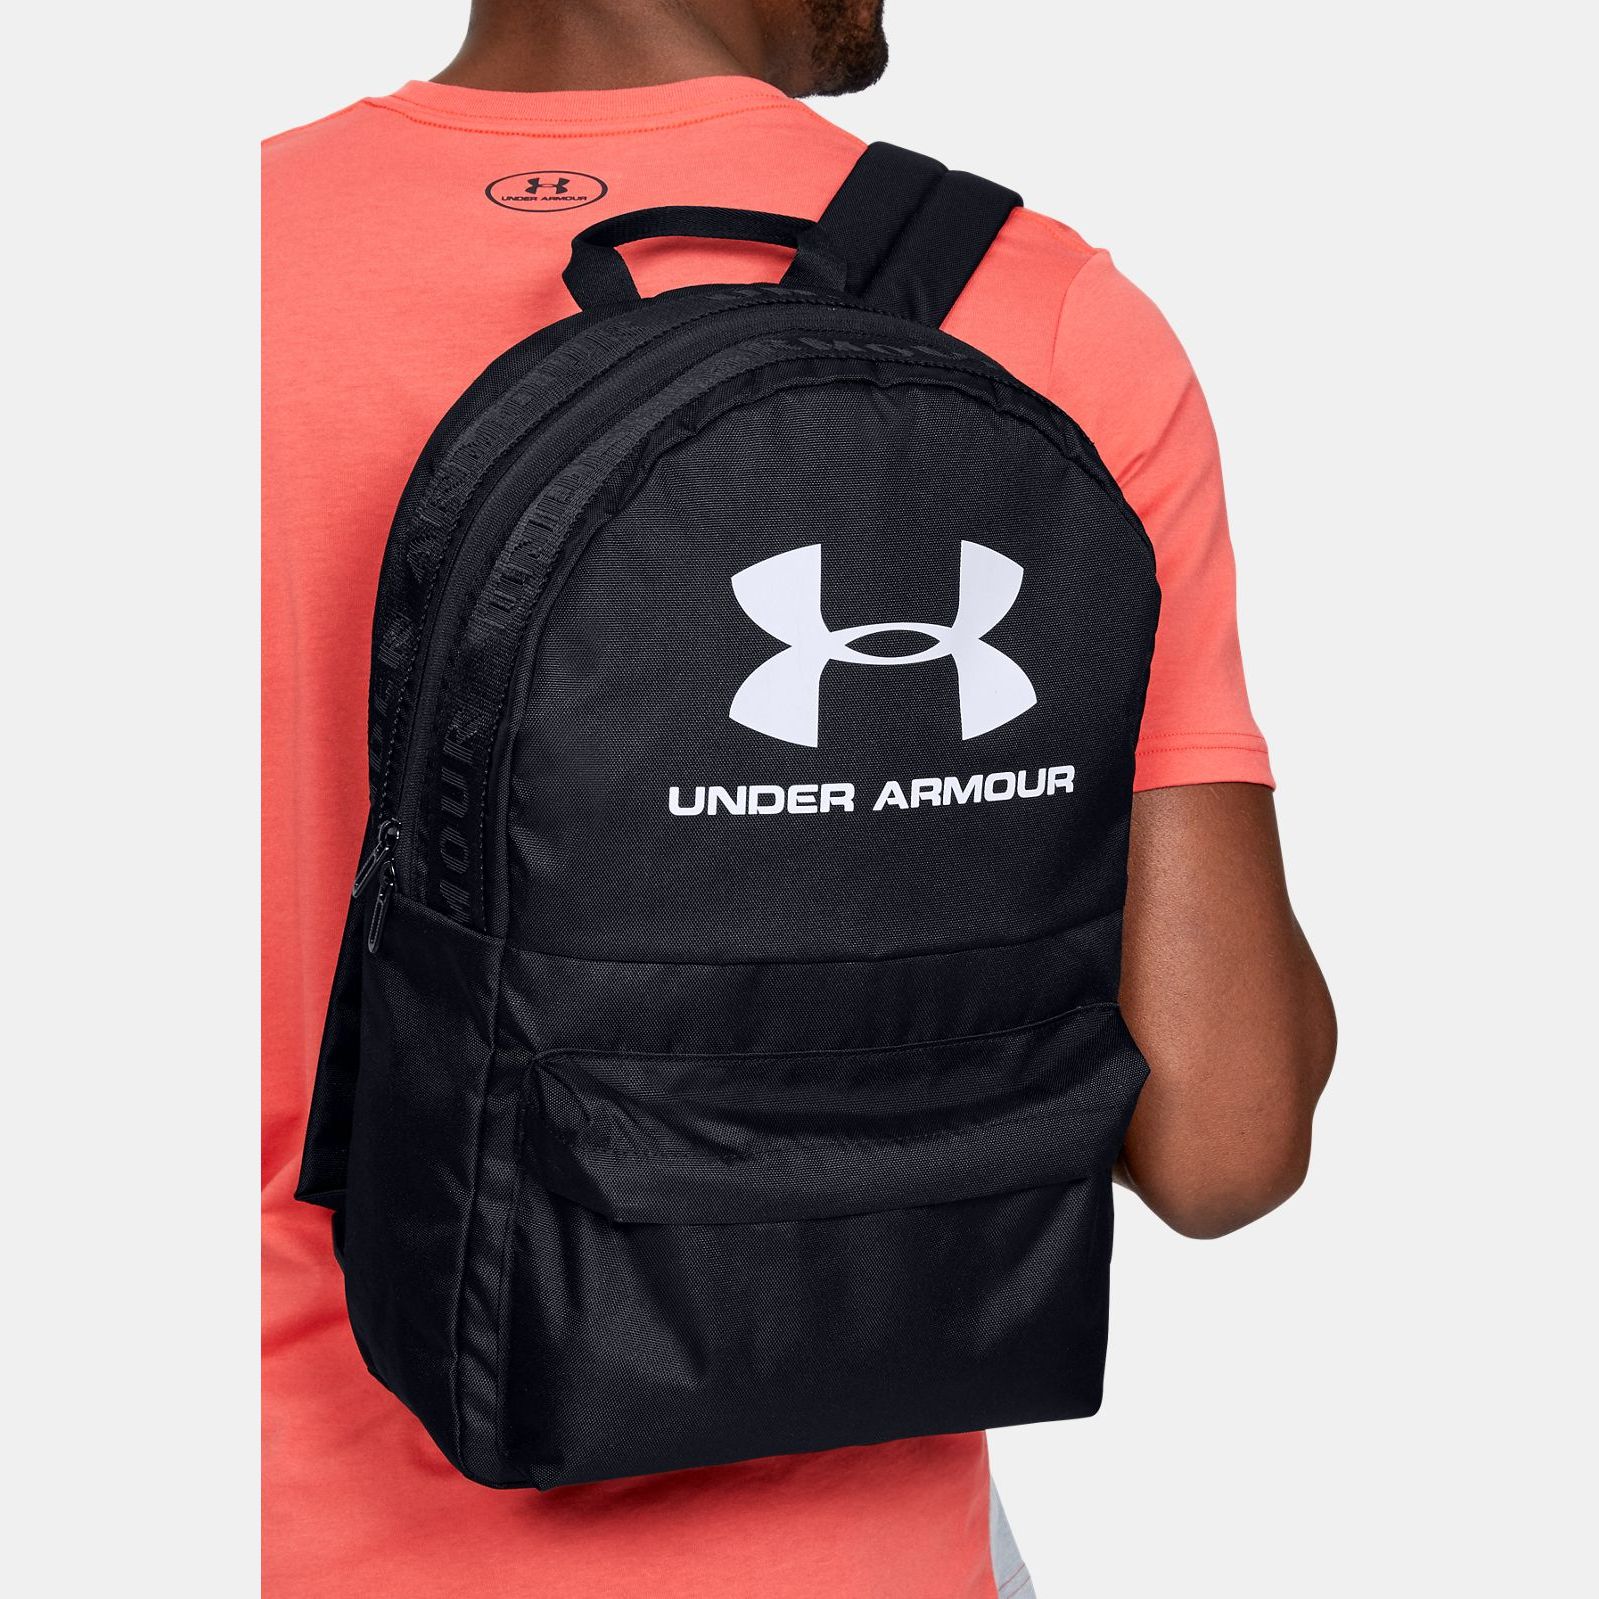 Bagpacks -  under armour UA Loudon Backpack 2654